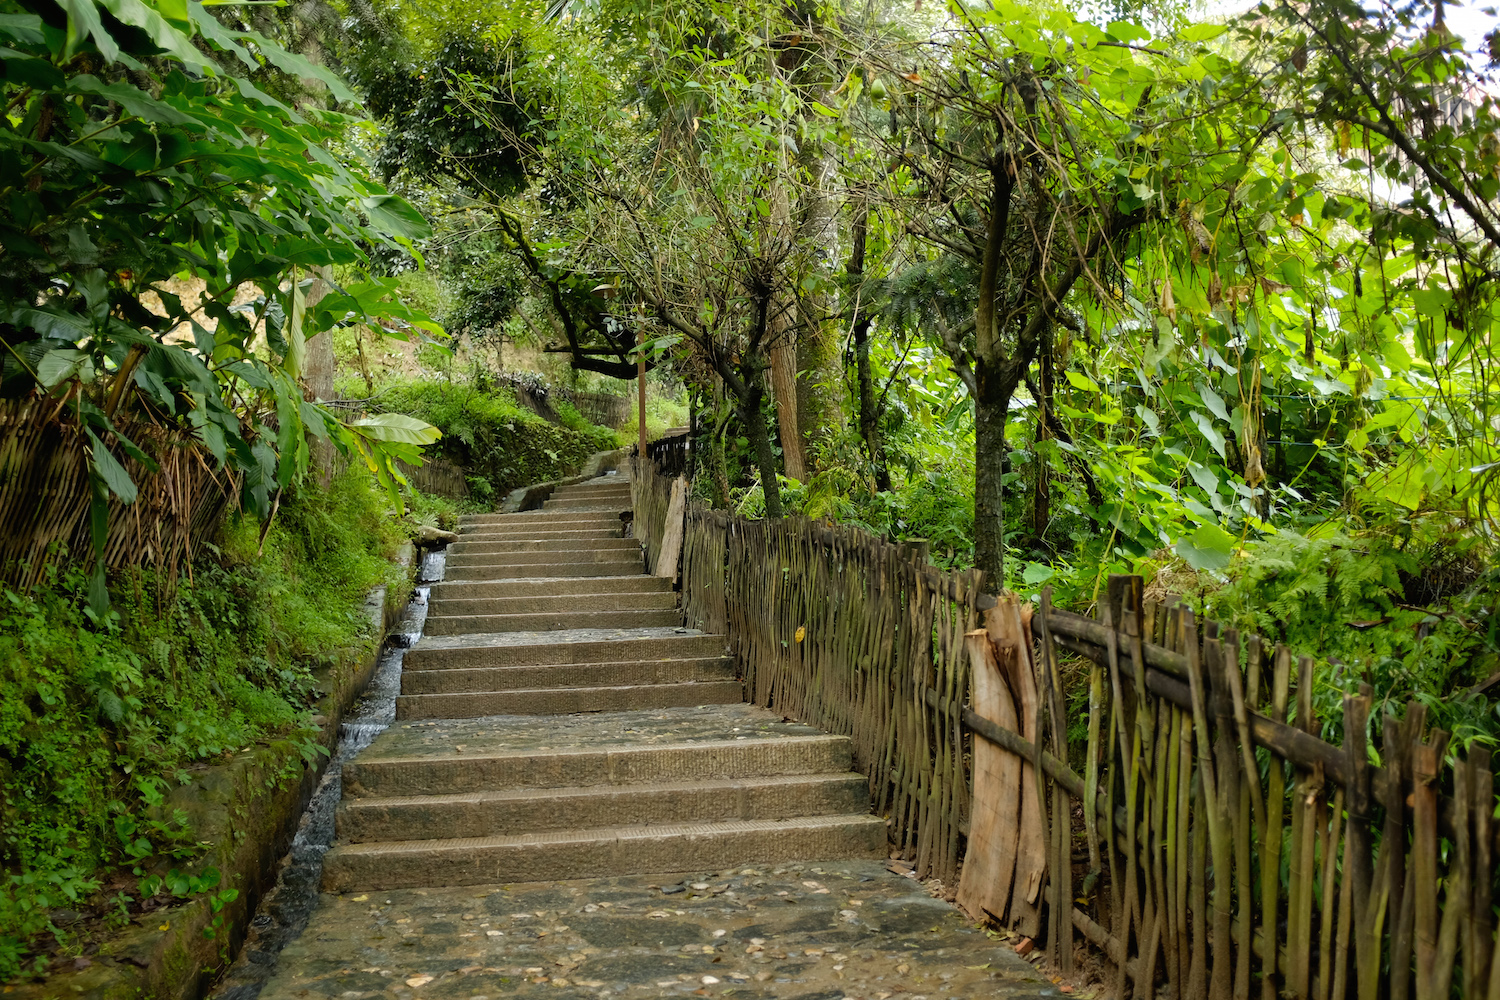 The walkway to Pugao Laozhai